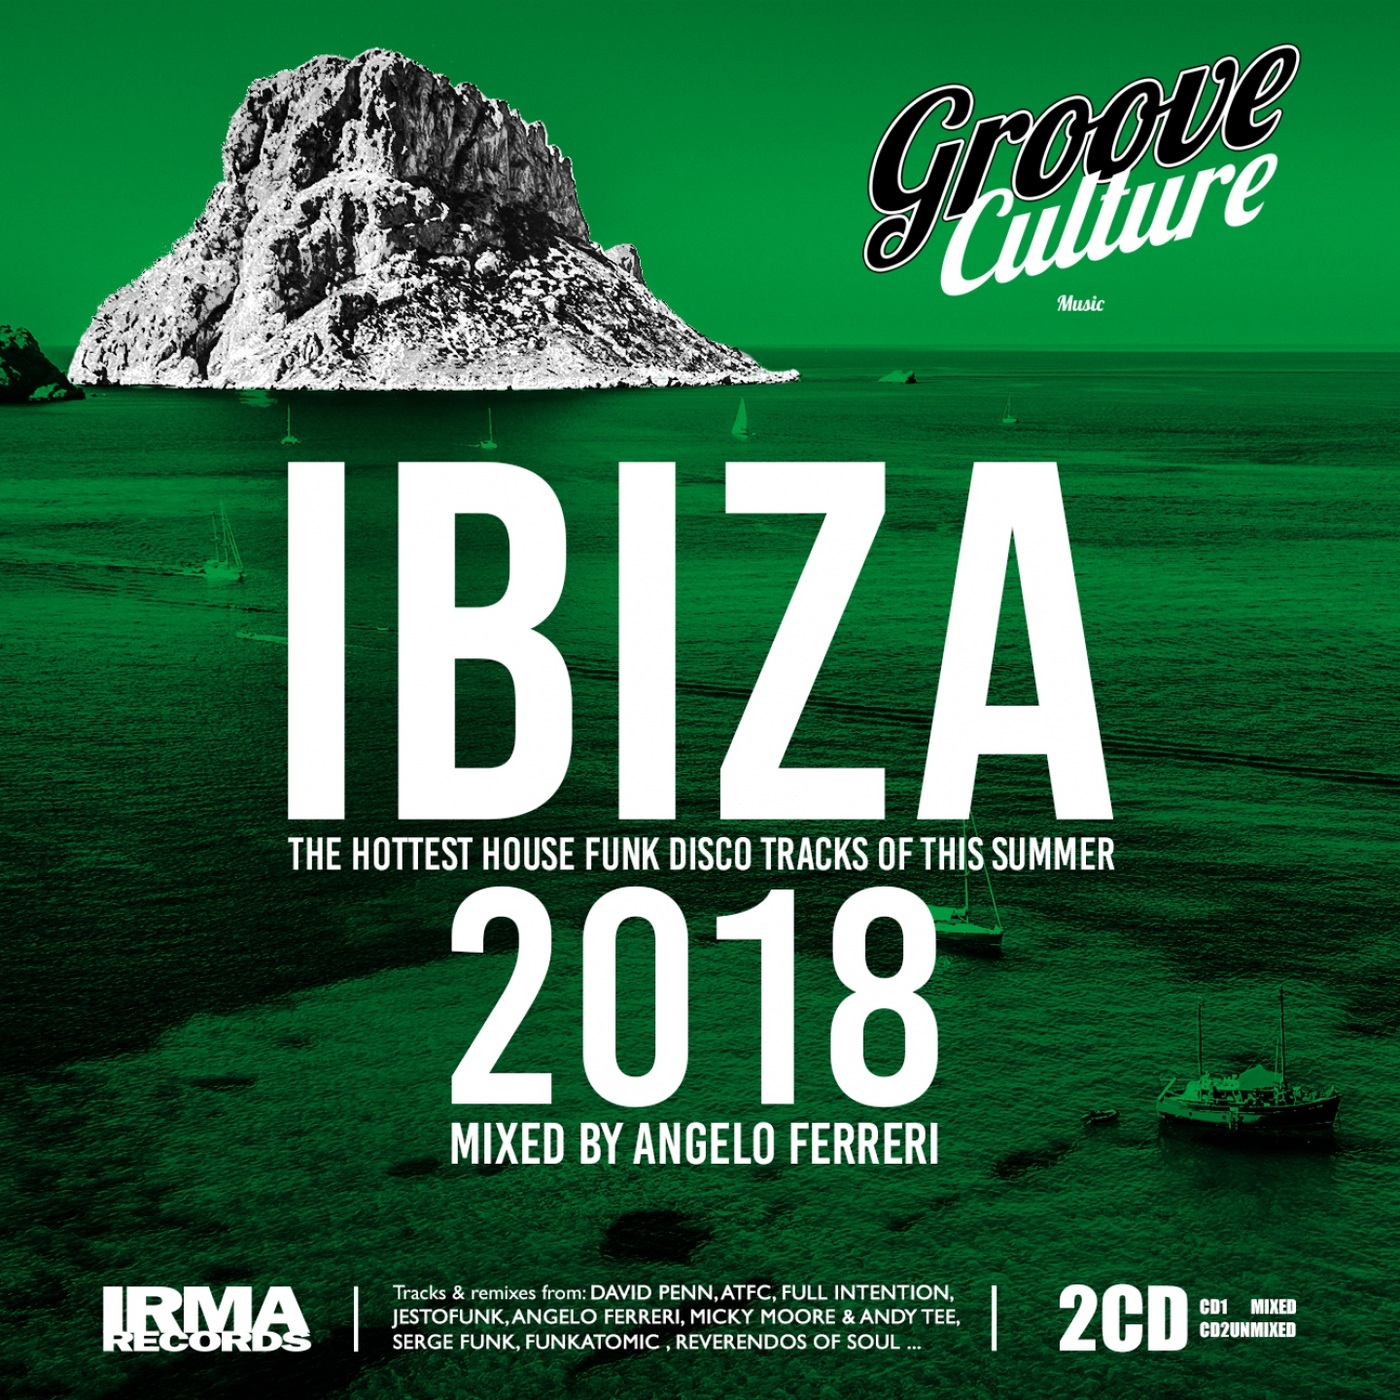 VA - Groove Culture IBIZA 2018 (Mixed by Angelo Ferreri) / Groove Culture